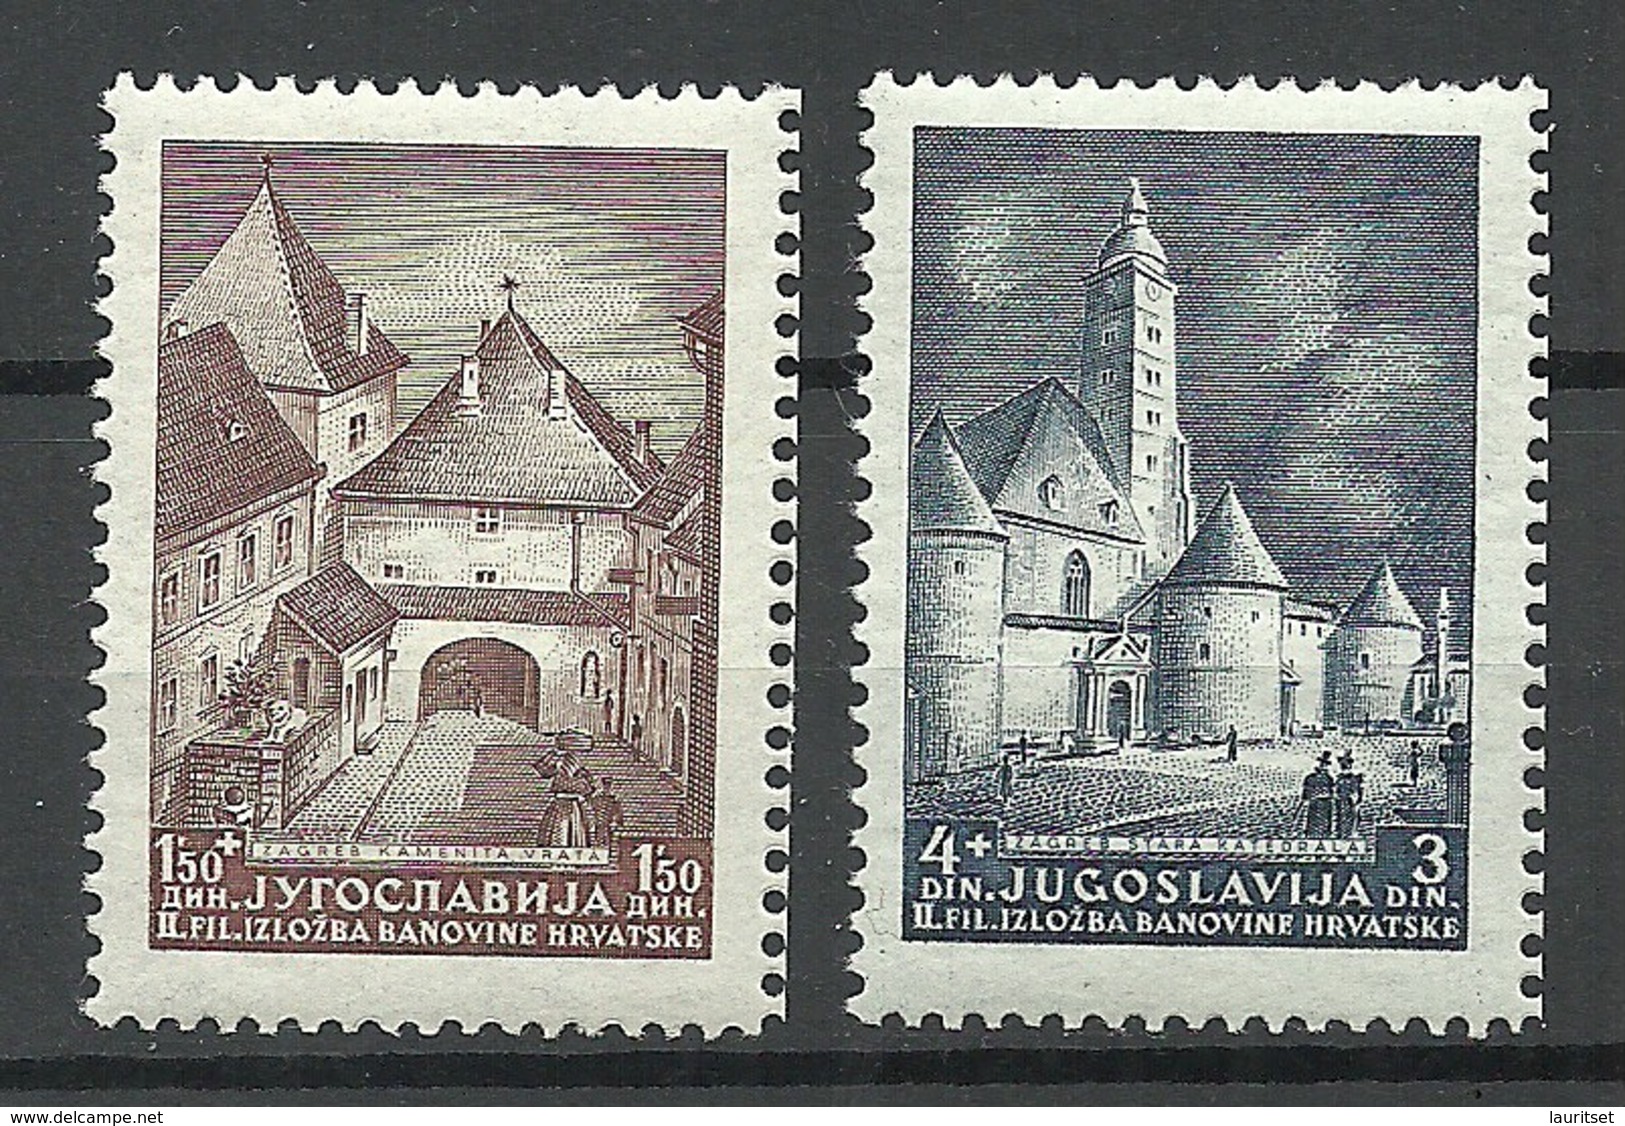 Jugoslavija KROATIA Kroatien 1941 Michel 347 - 348 Briefmarkenausstellung Zagreb MNH - Ungebraucht